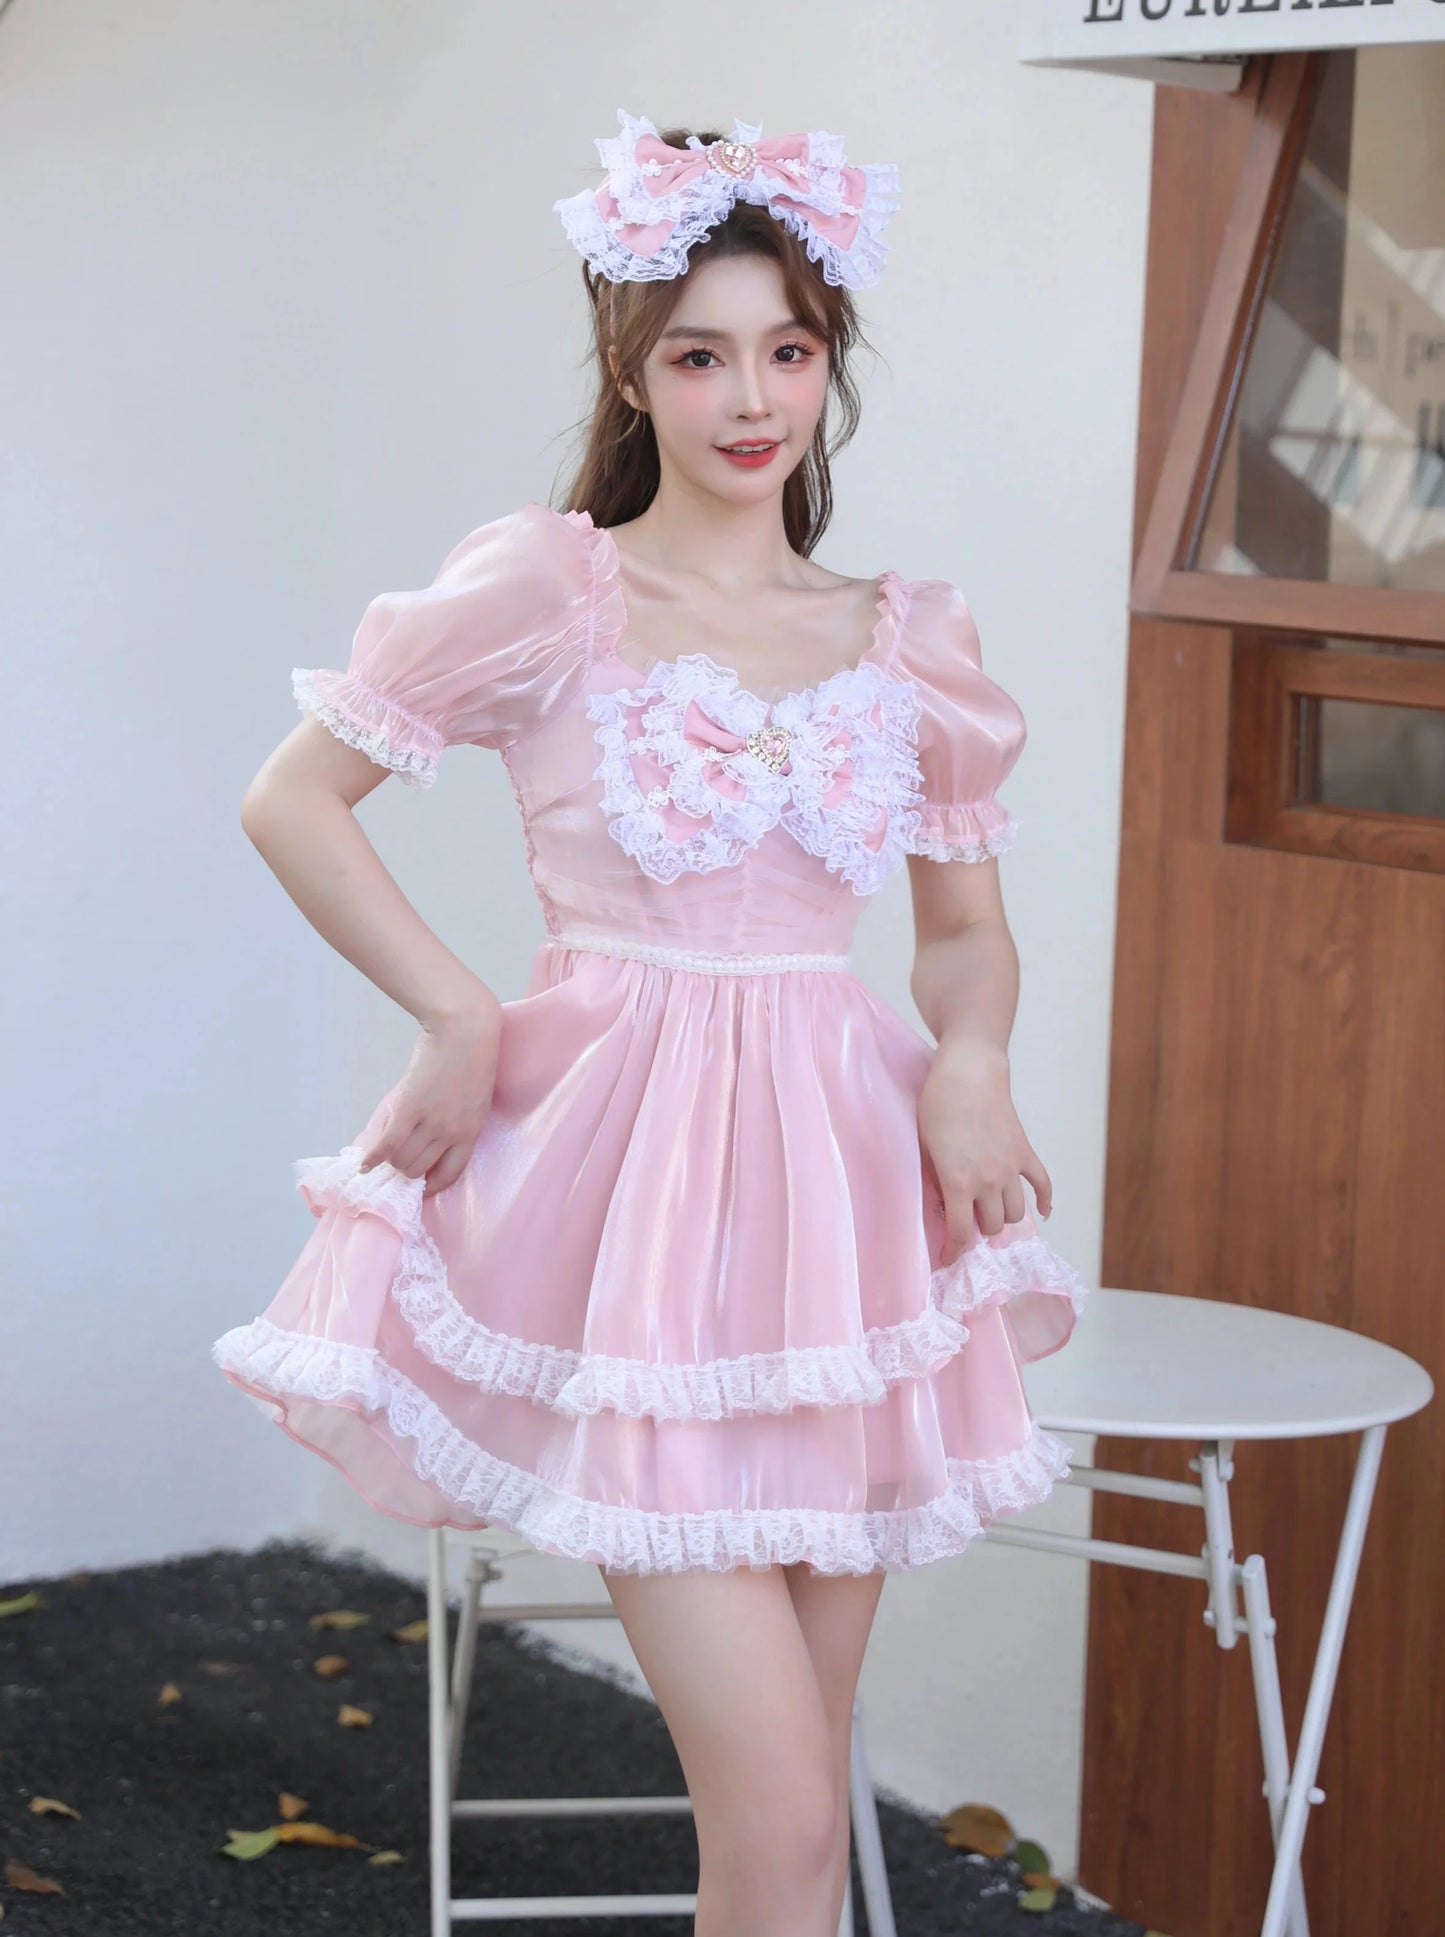 Sweet girly powder pinky ribbon dress